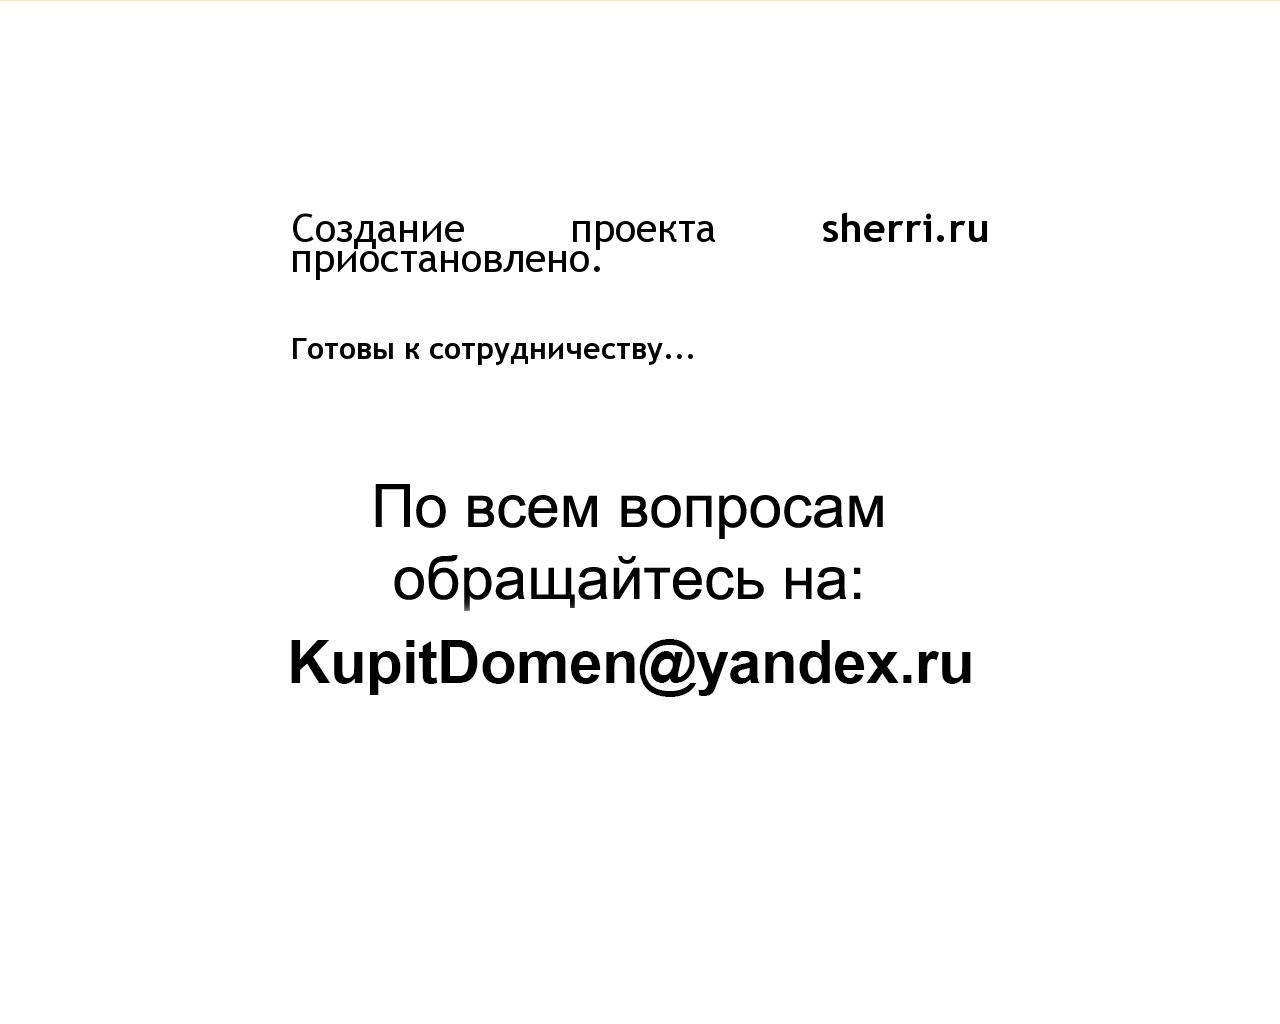 Изображение сайта sherri.ru в разрешении 1280x1024